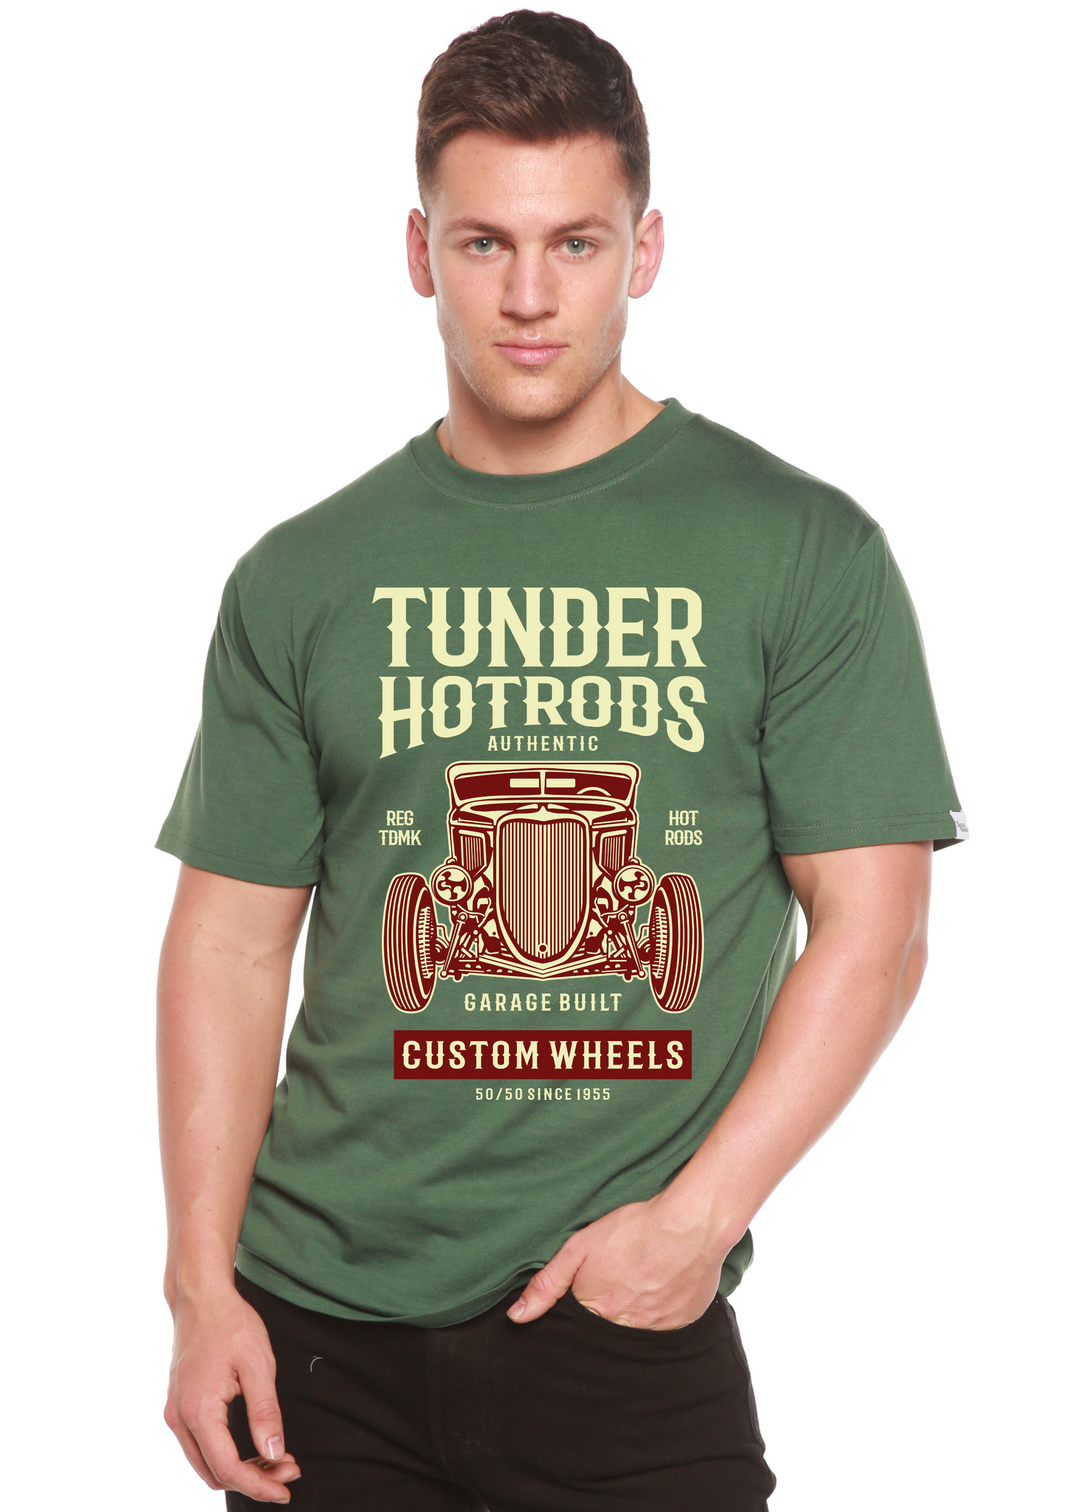 Thunder Hot men's bamboo tshirt pine green